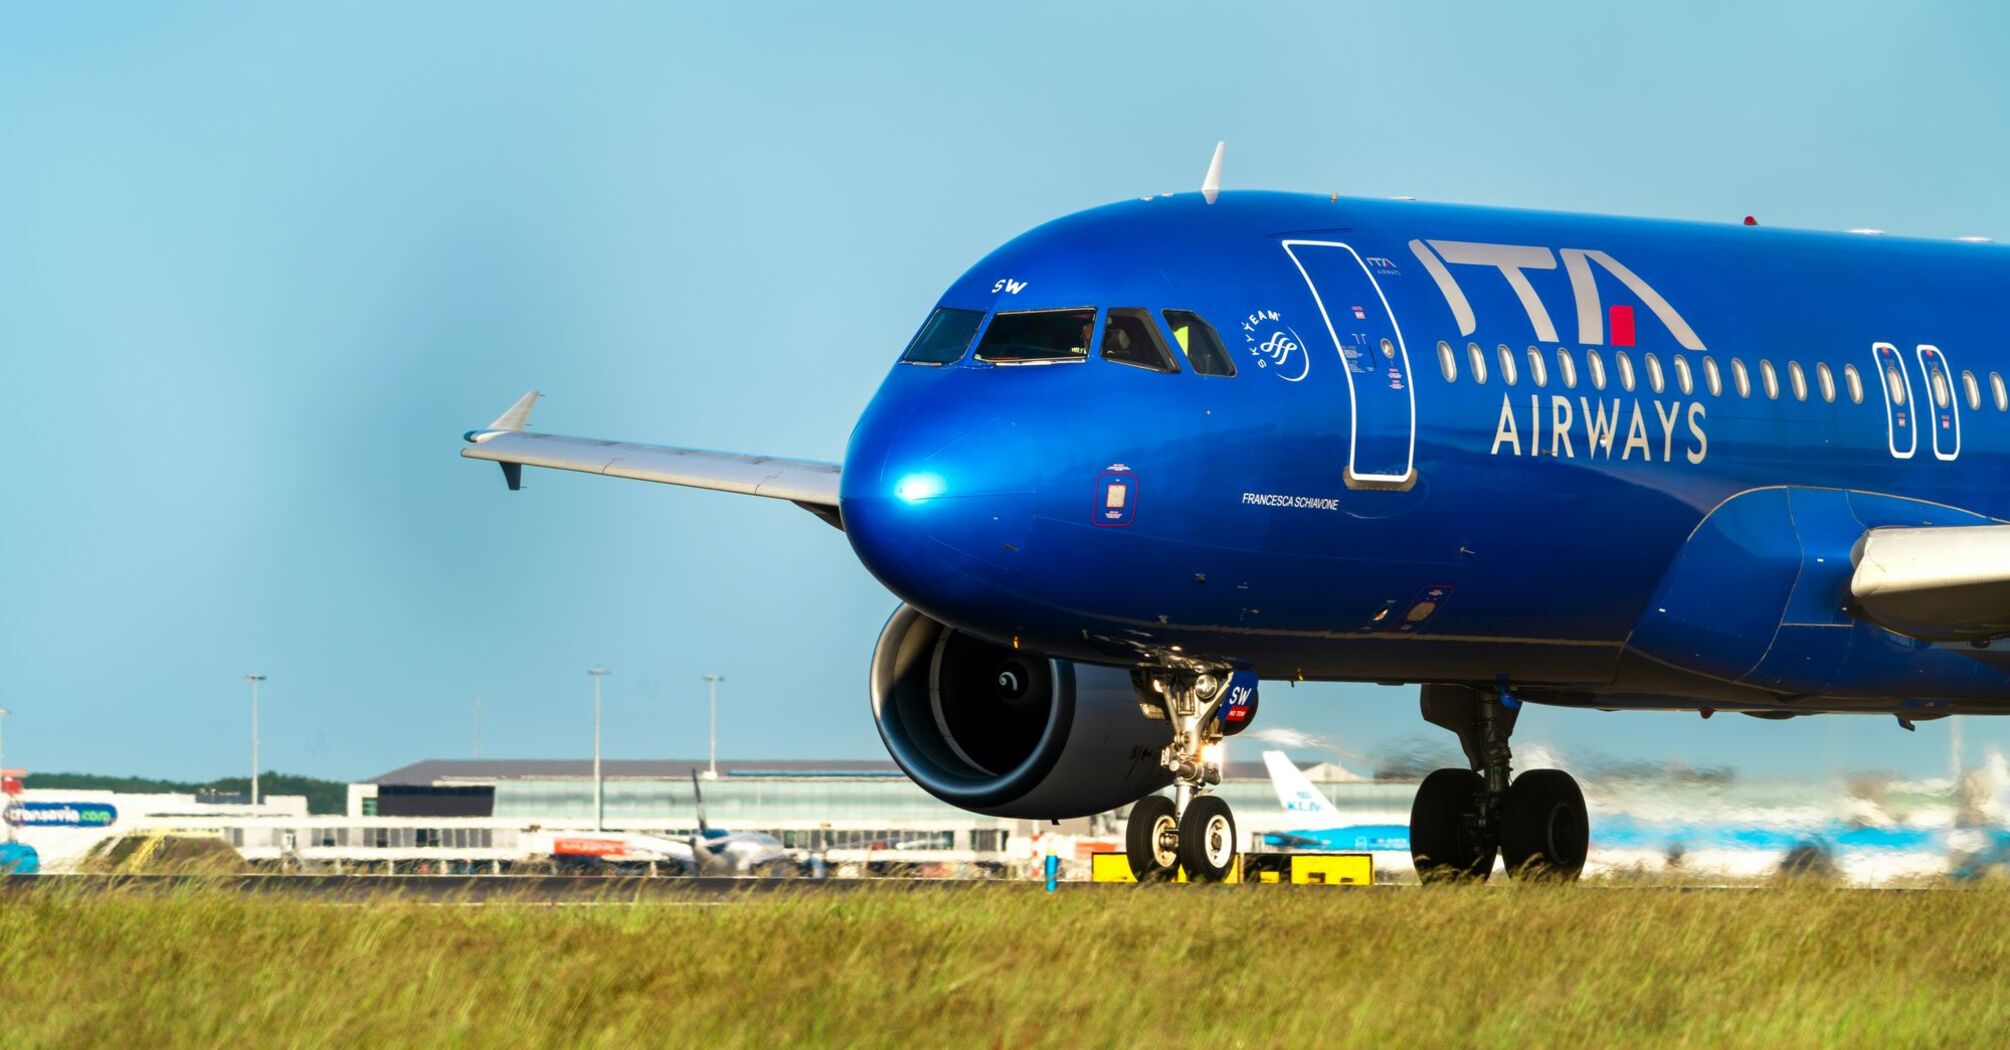 ITA Airways flight to Milan Linate taxiing to the Polderbaan runway at Schiphol airport for departure.